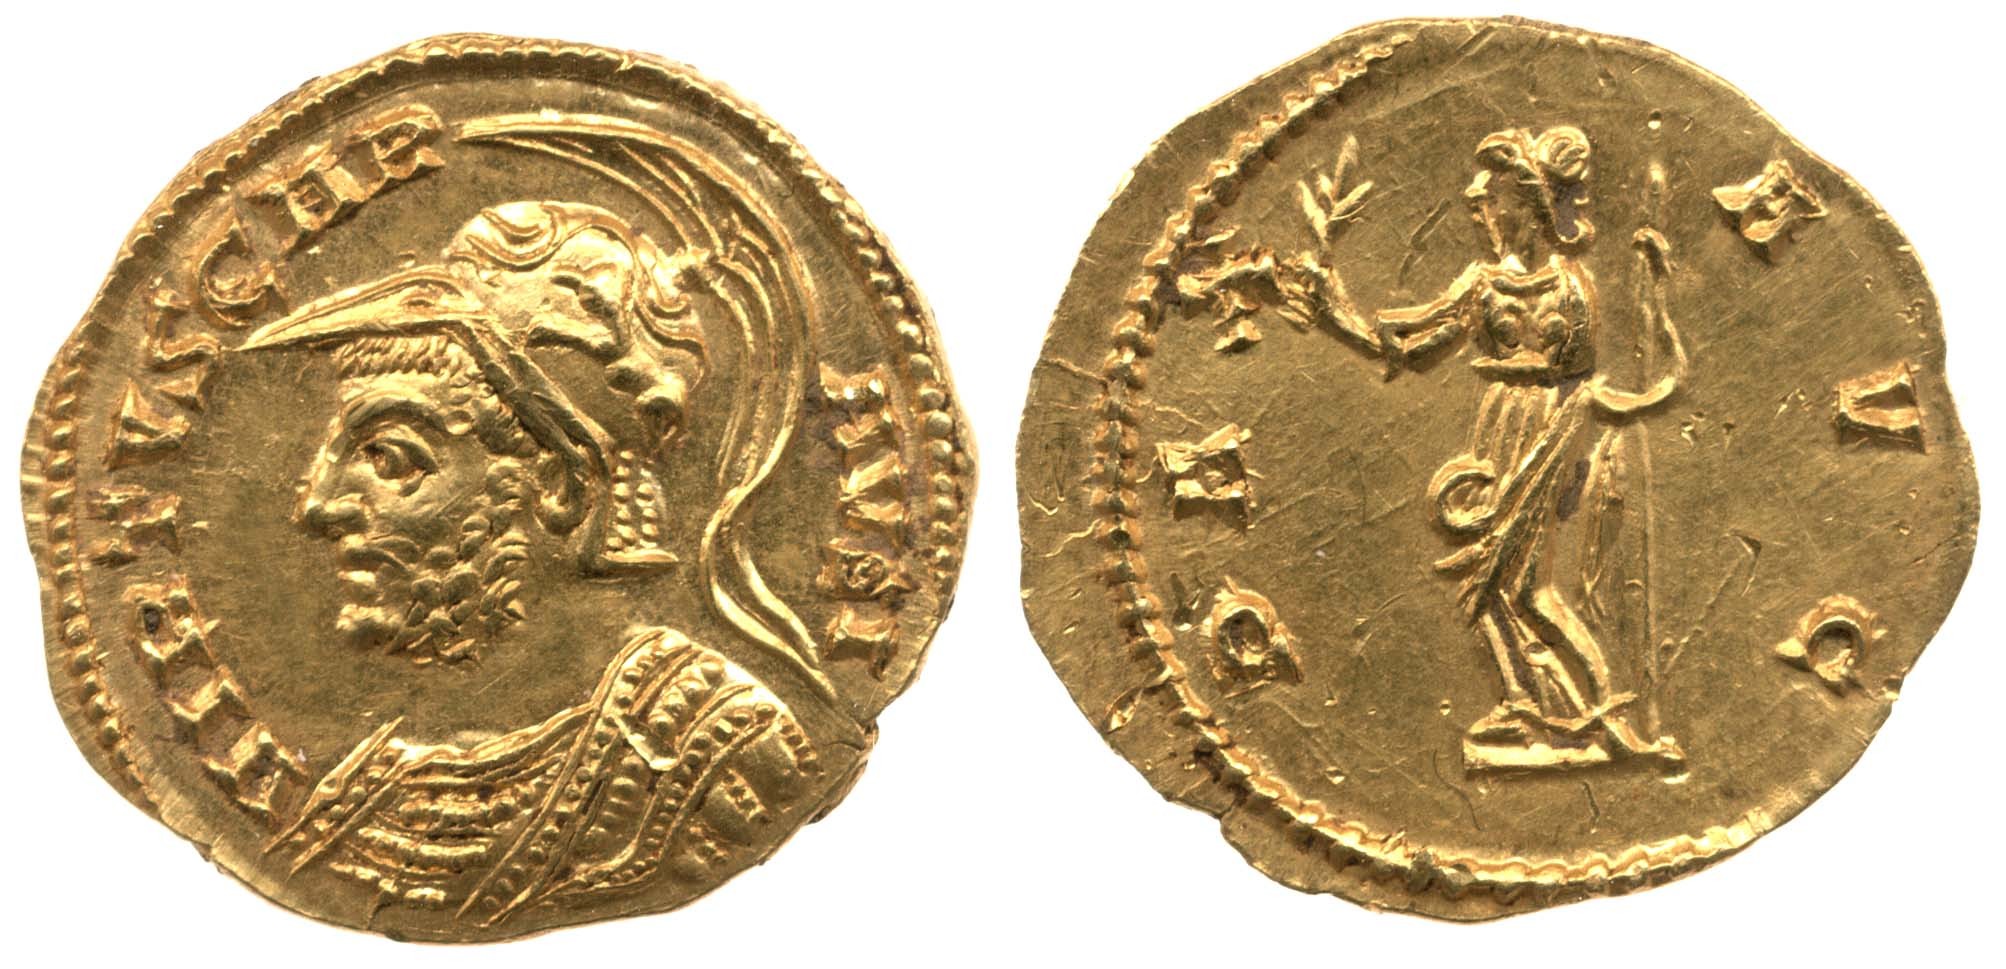 An Aureus of Carausius, minted at London